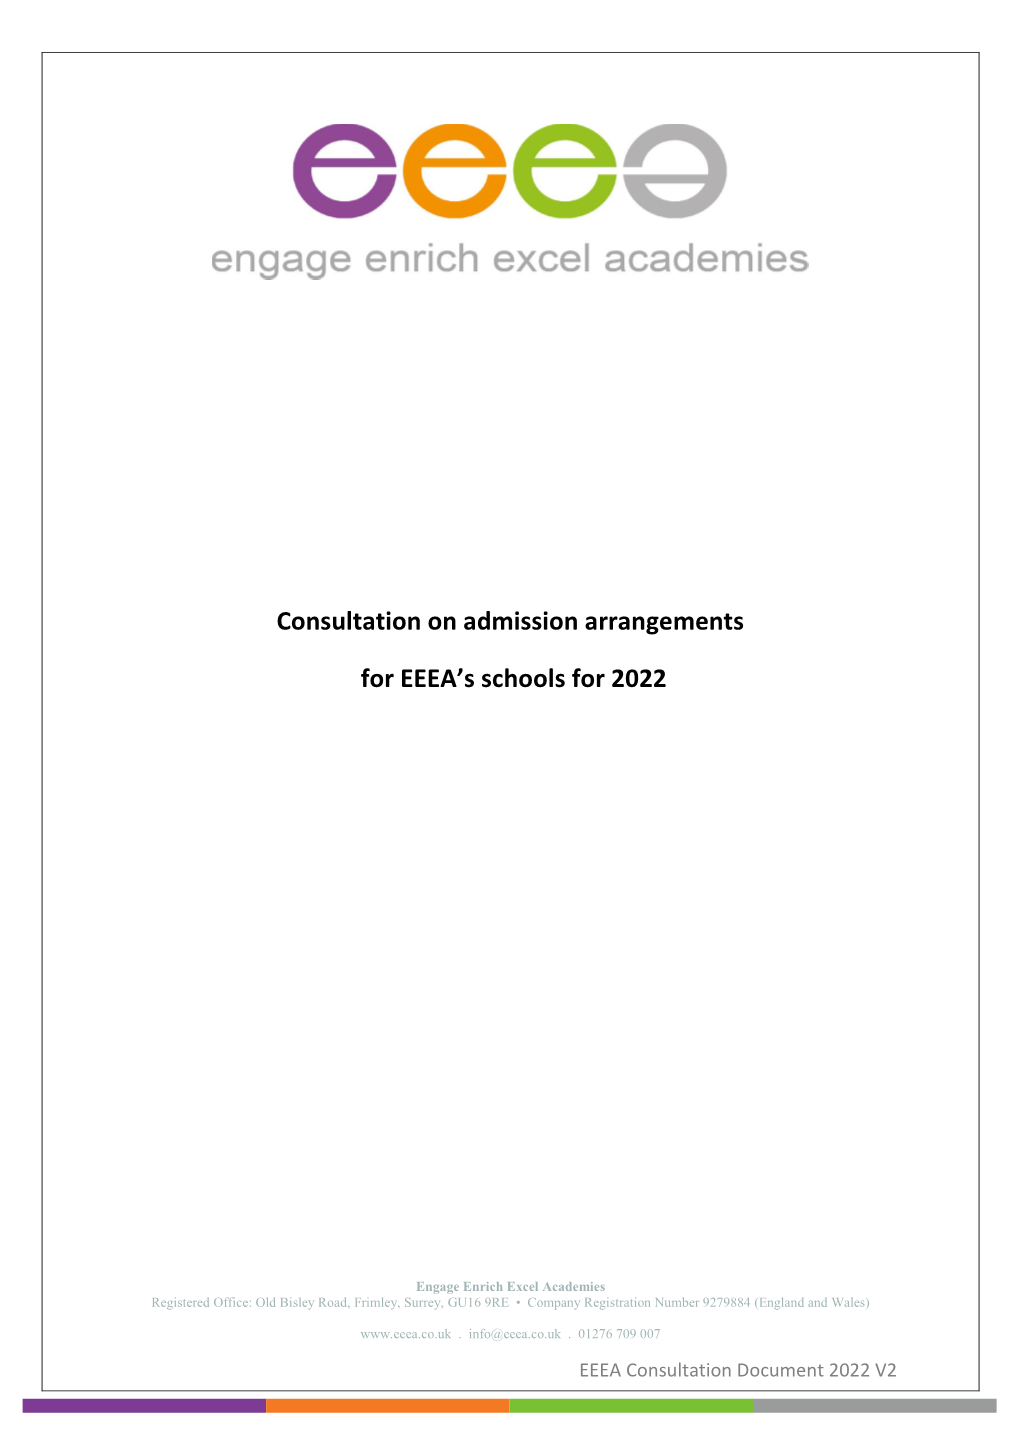 EEEA Consultation Document 2022 V2 Consultation on Admission Arrangements